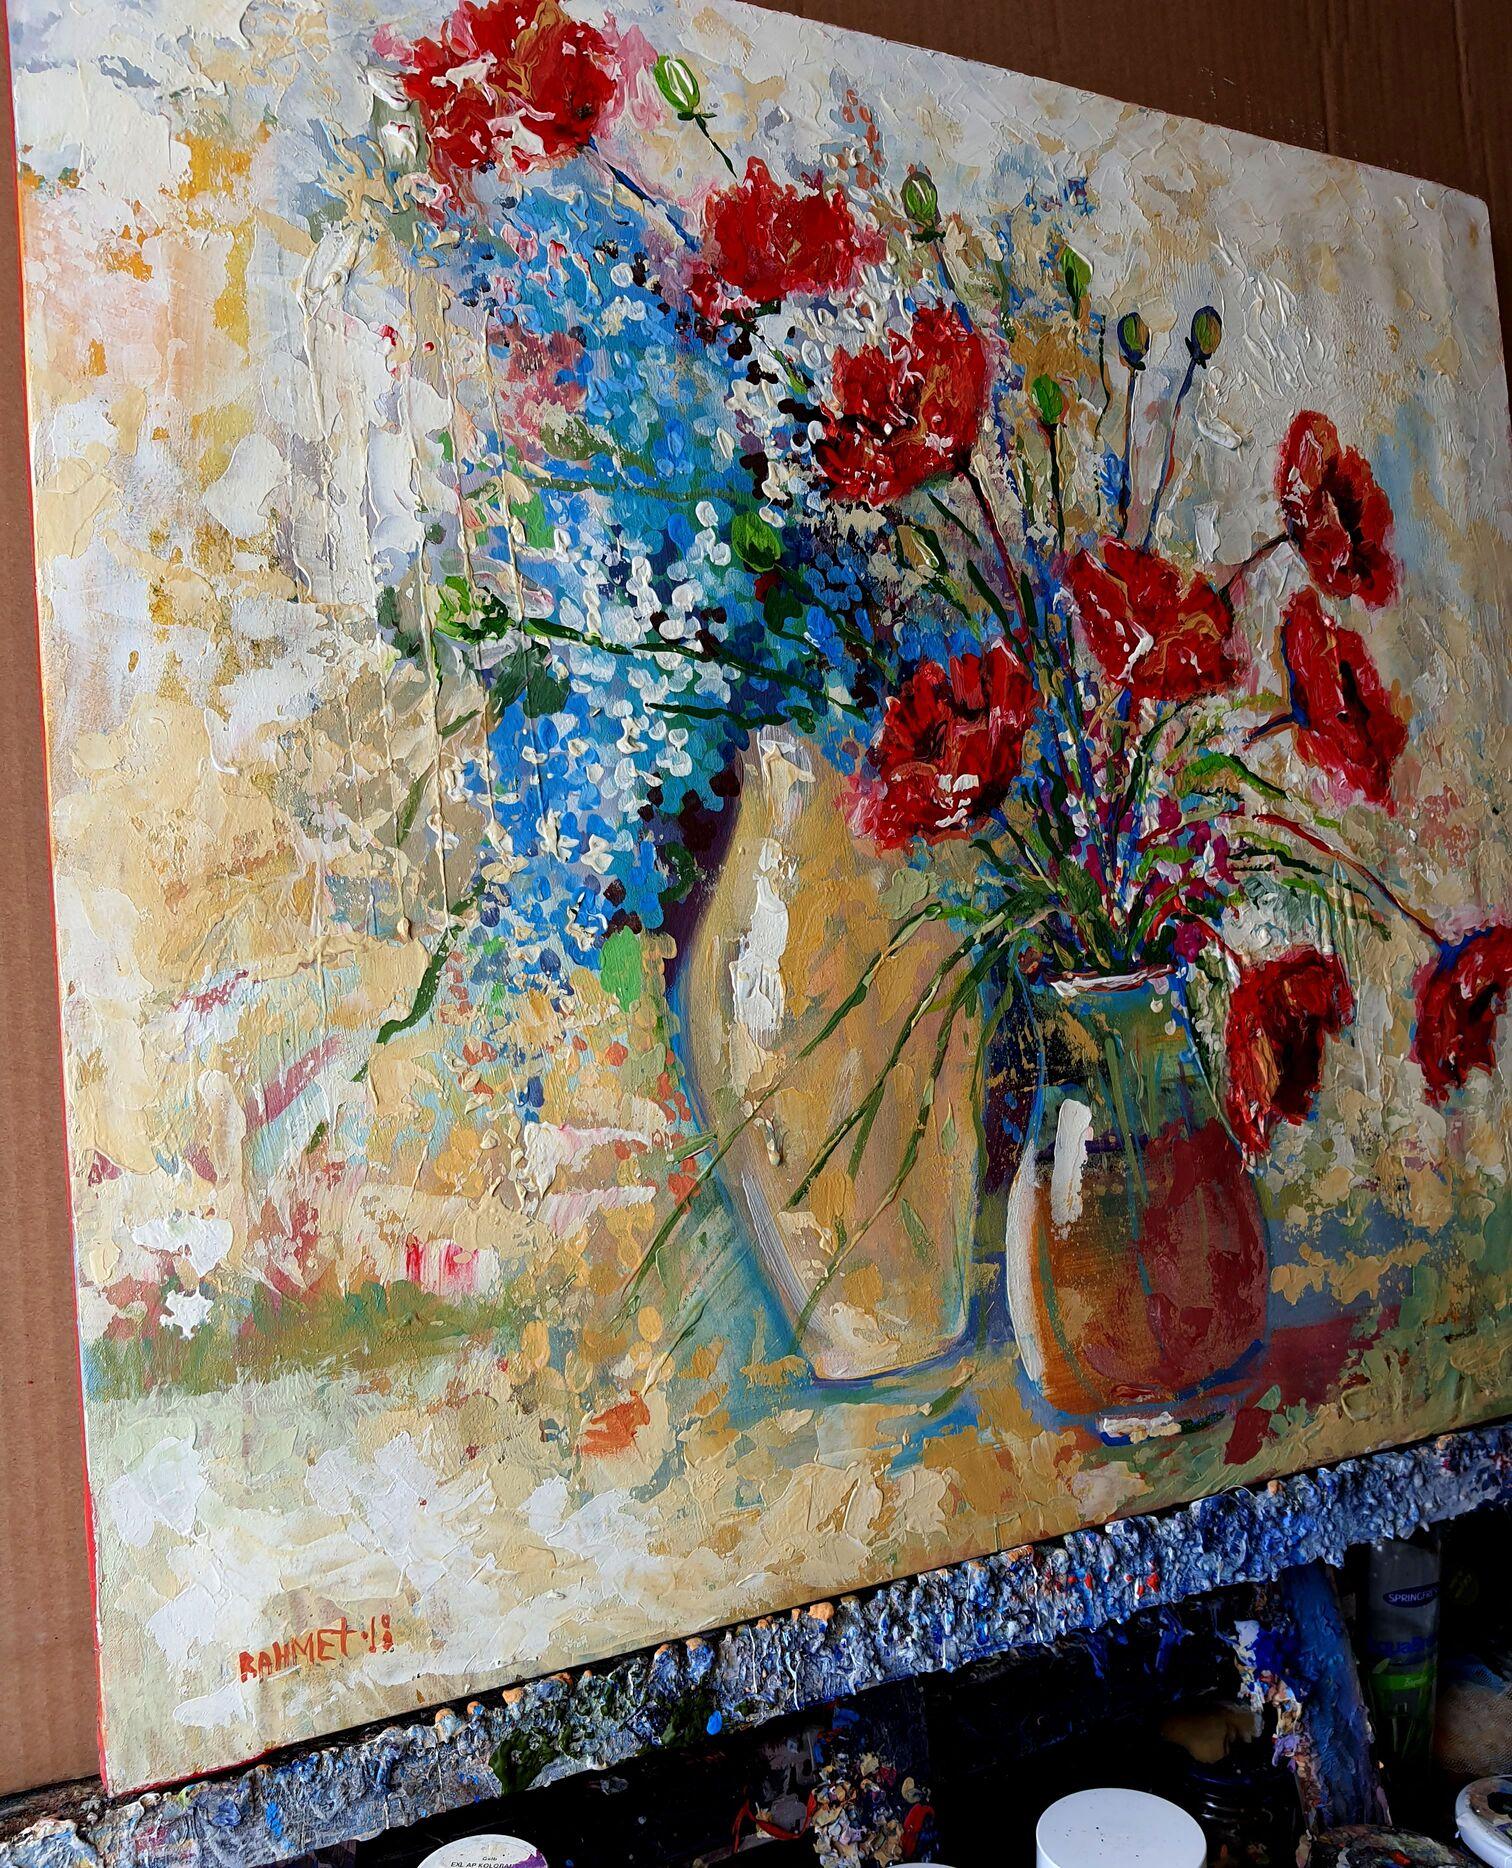  Poppies and Two Jugs - Impressionist Painting by RAKHMET REDZHEPOV (RAMZI)